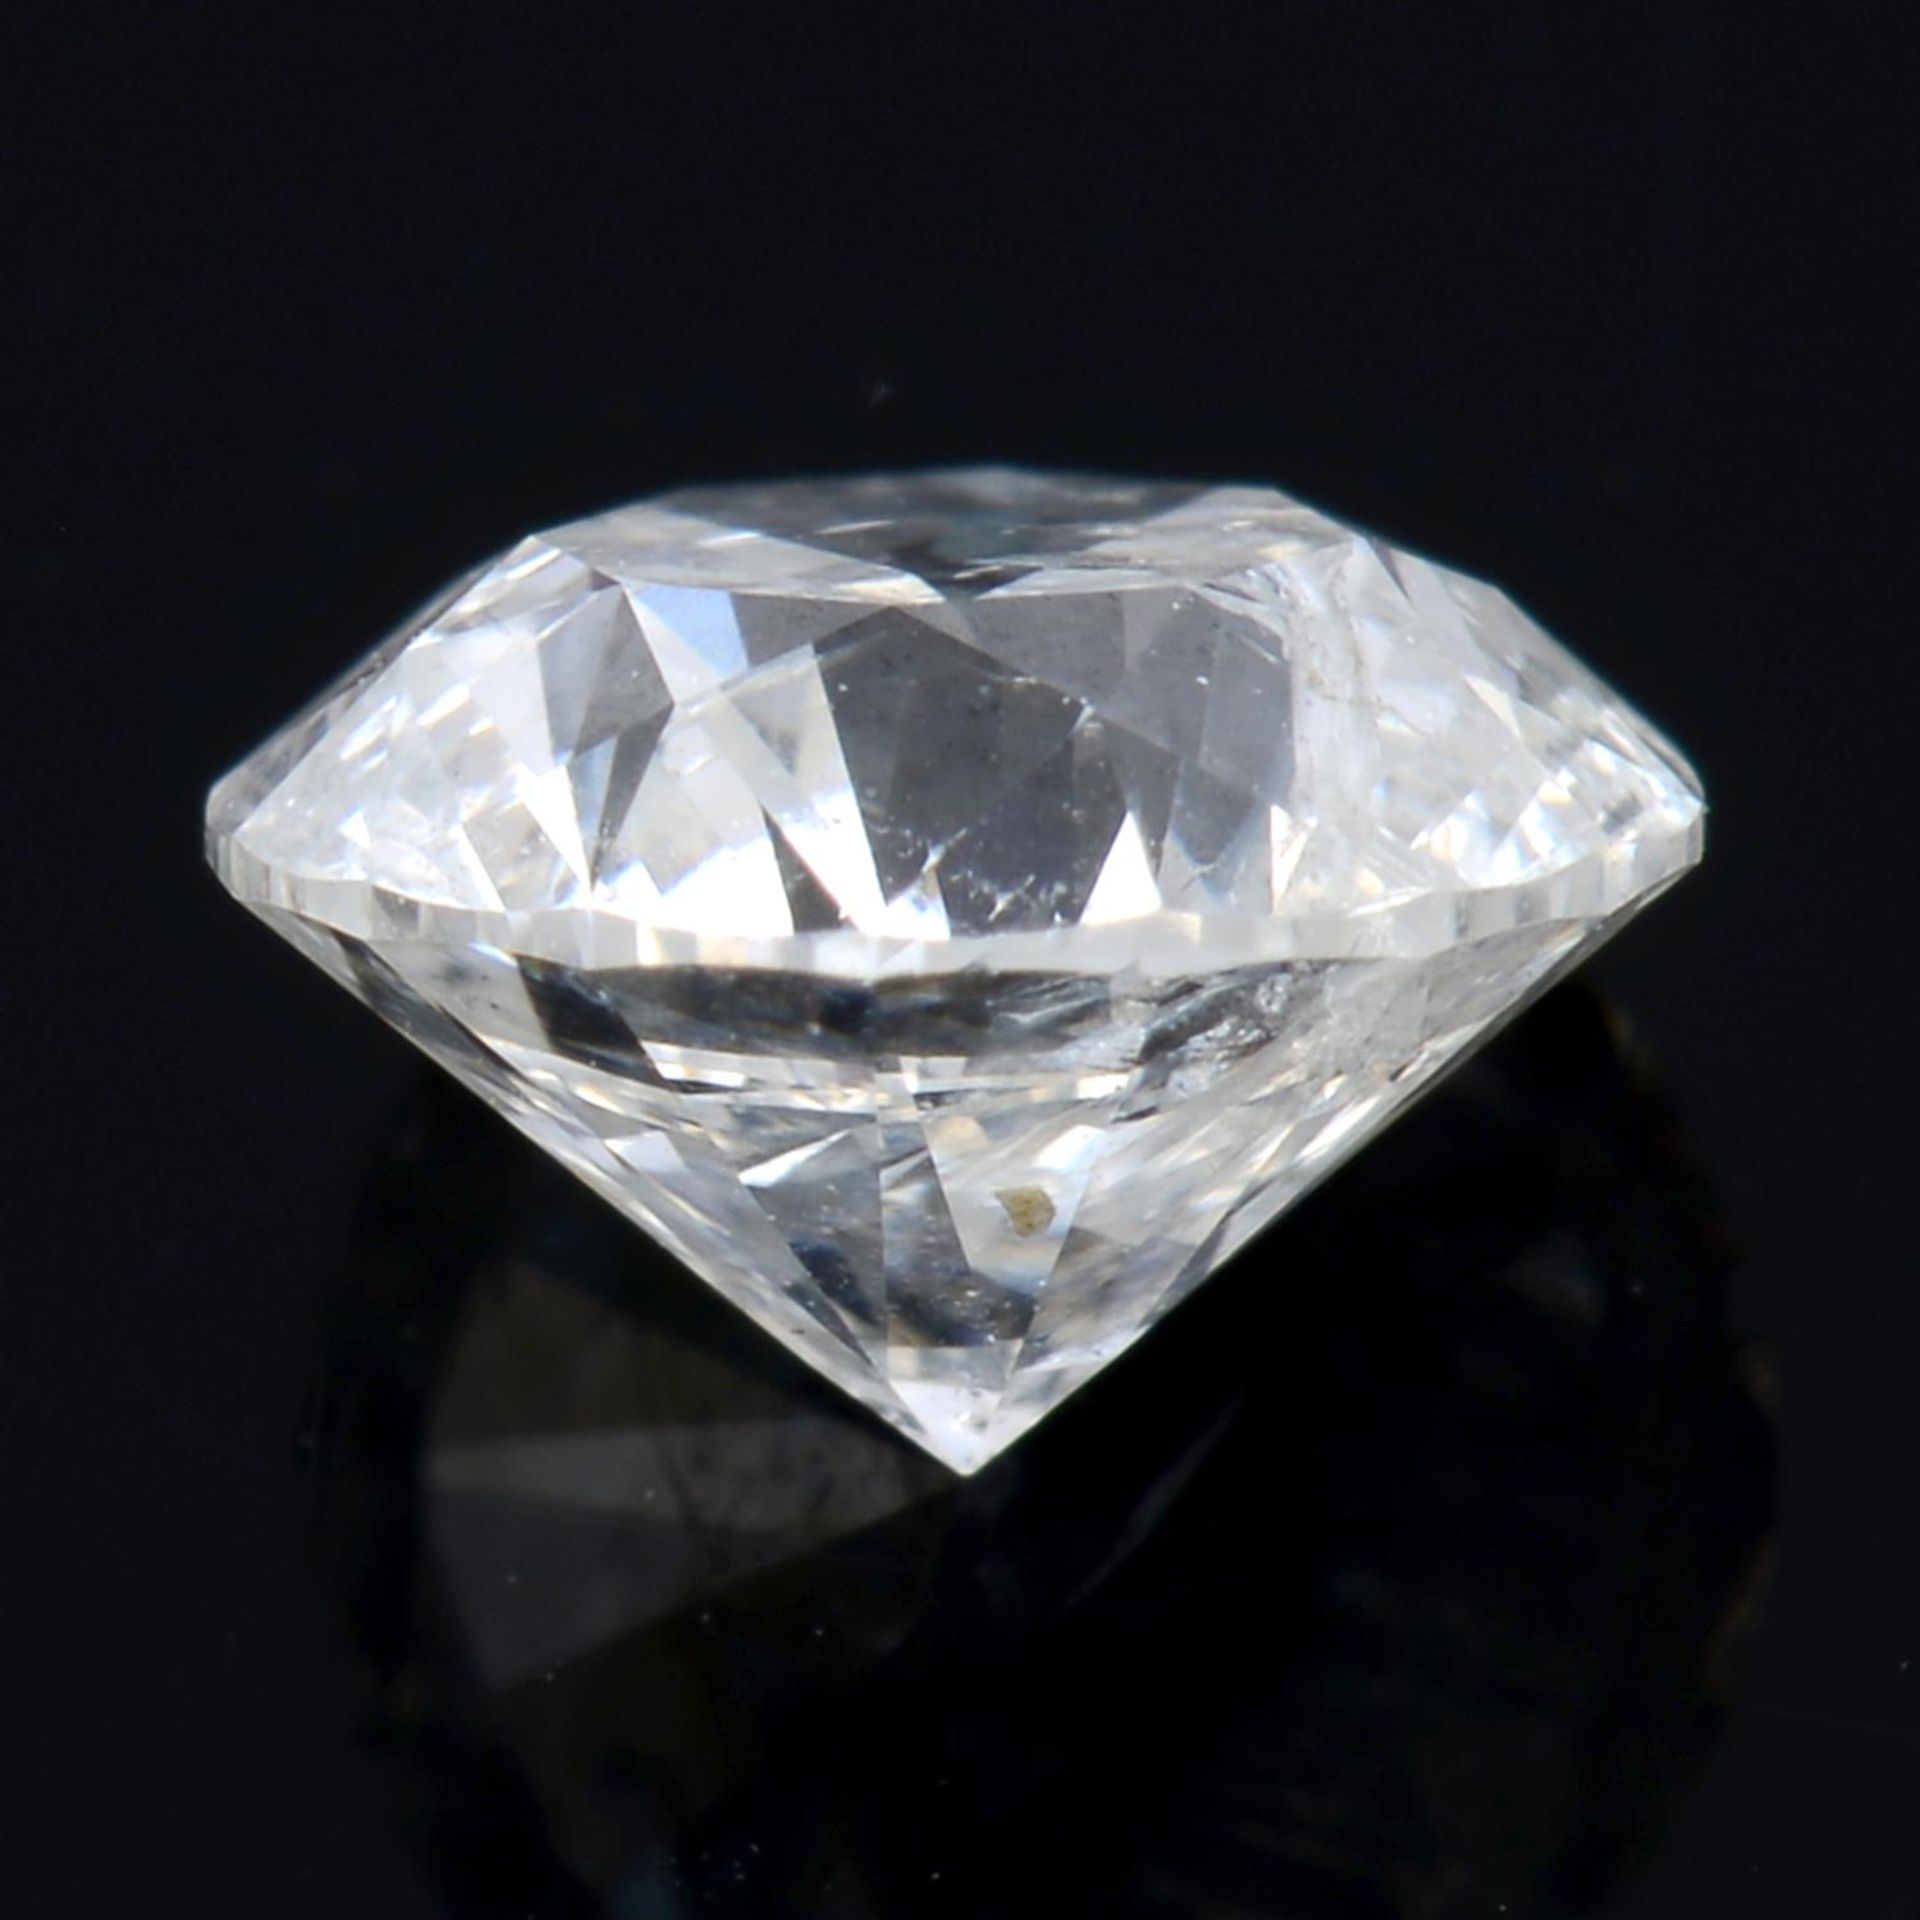 Brilliant-cut diamond, 0.76ct - Image 2 of 2